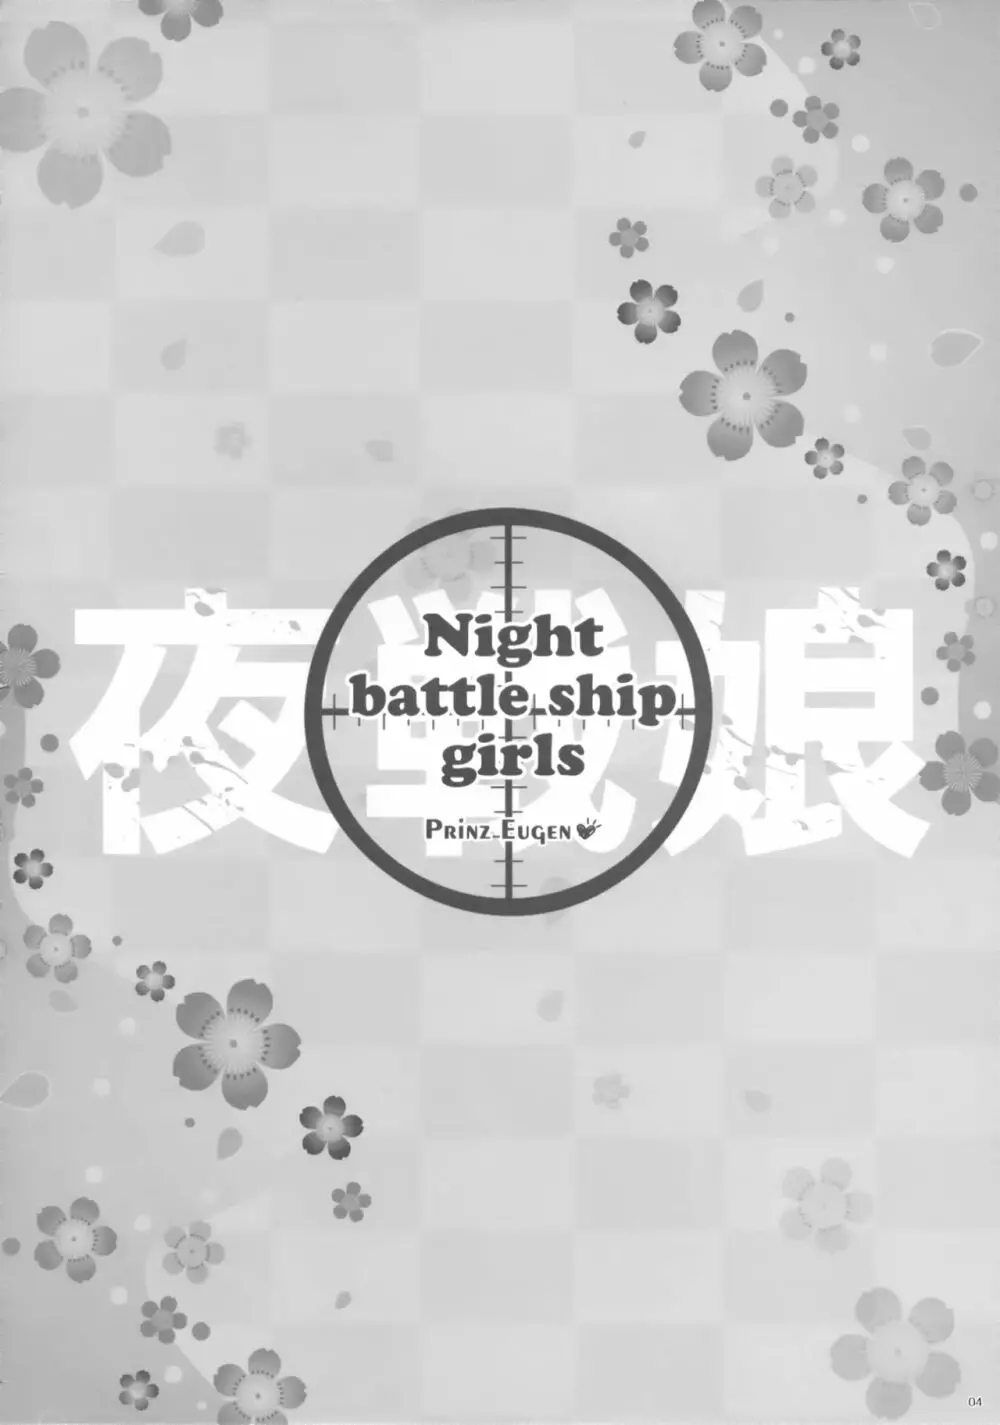 Night battle ship girls -PRiNZ EUGEN- - page3